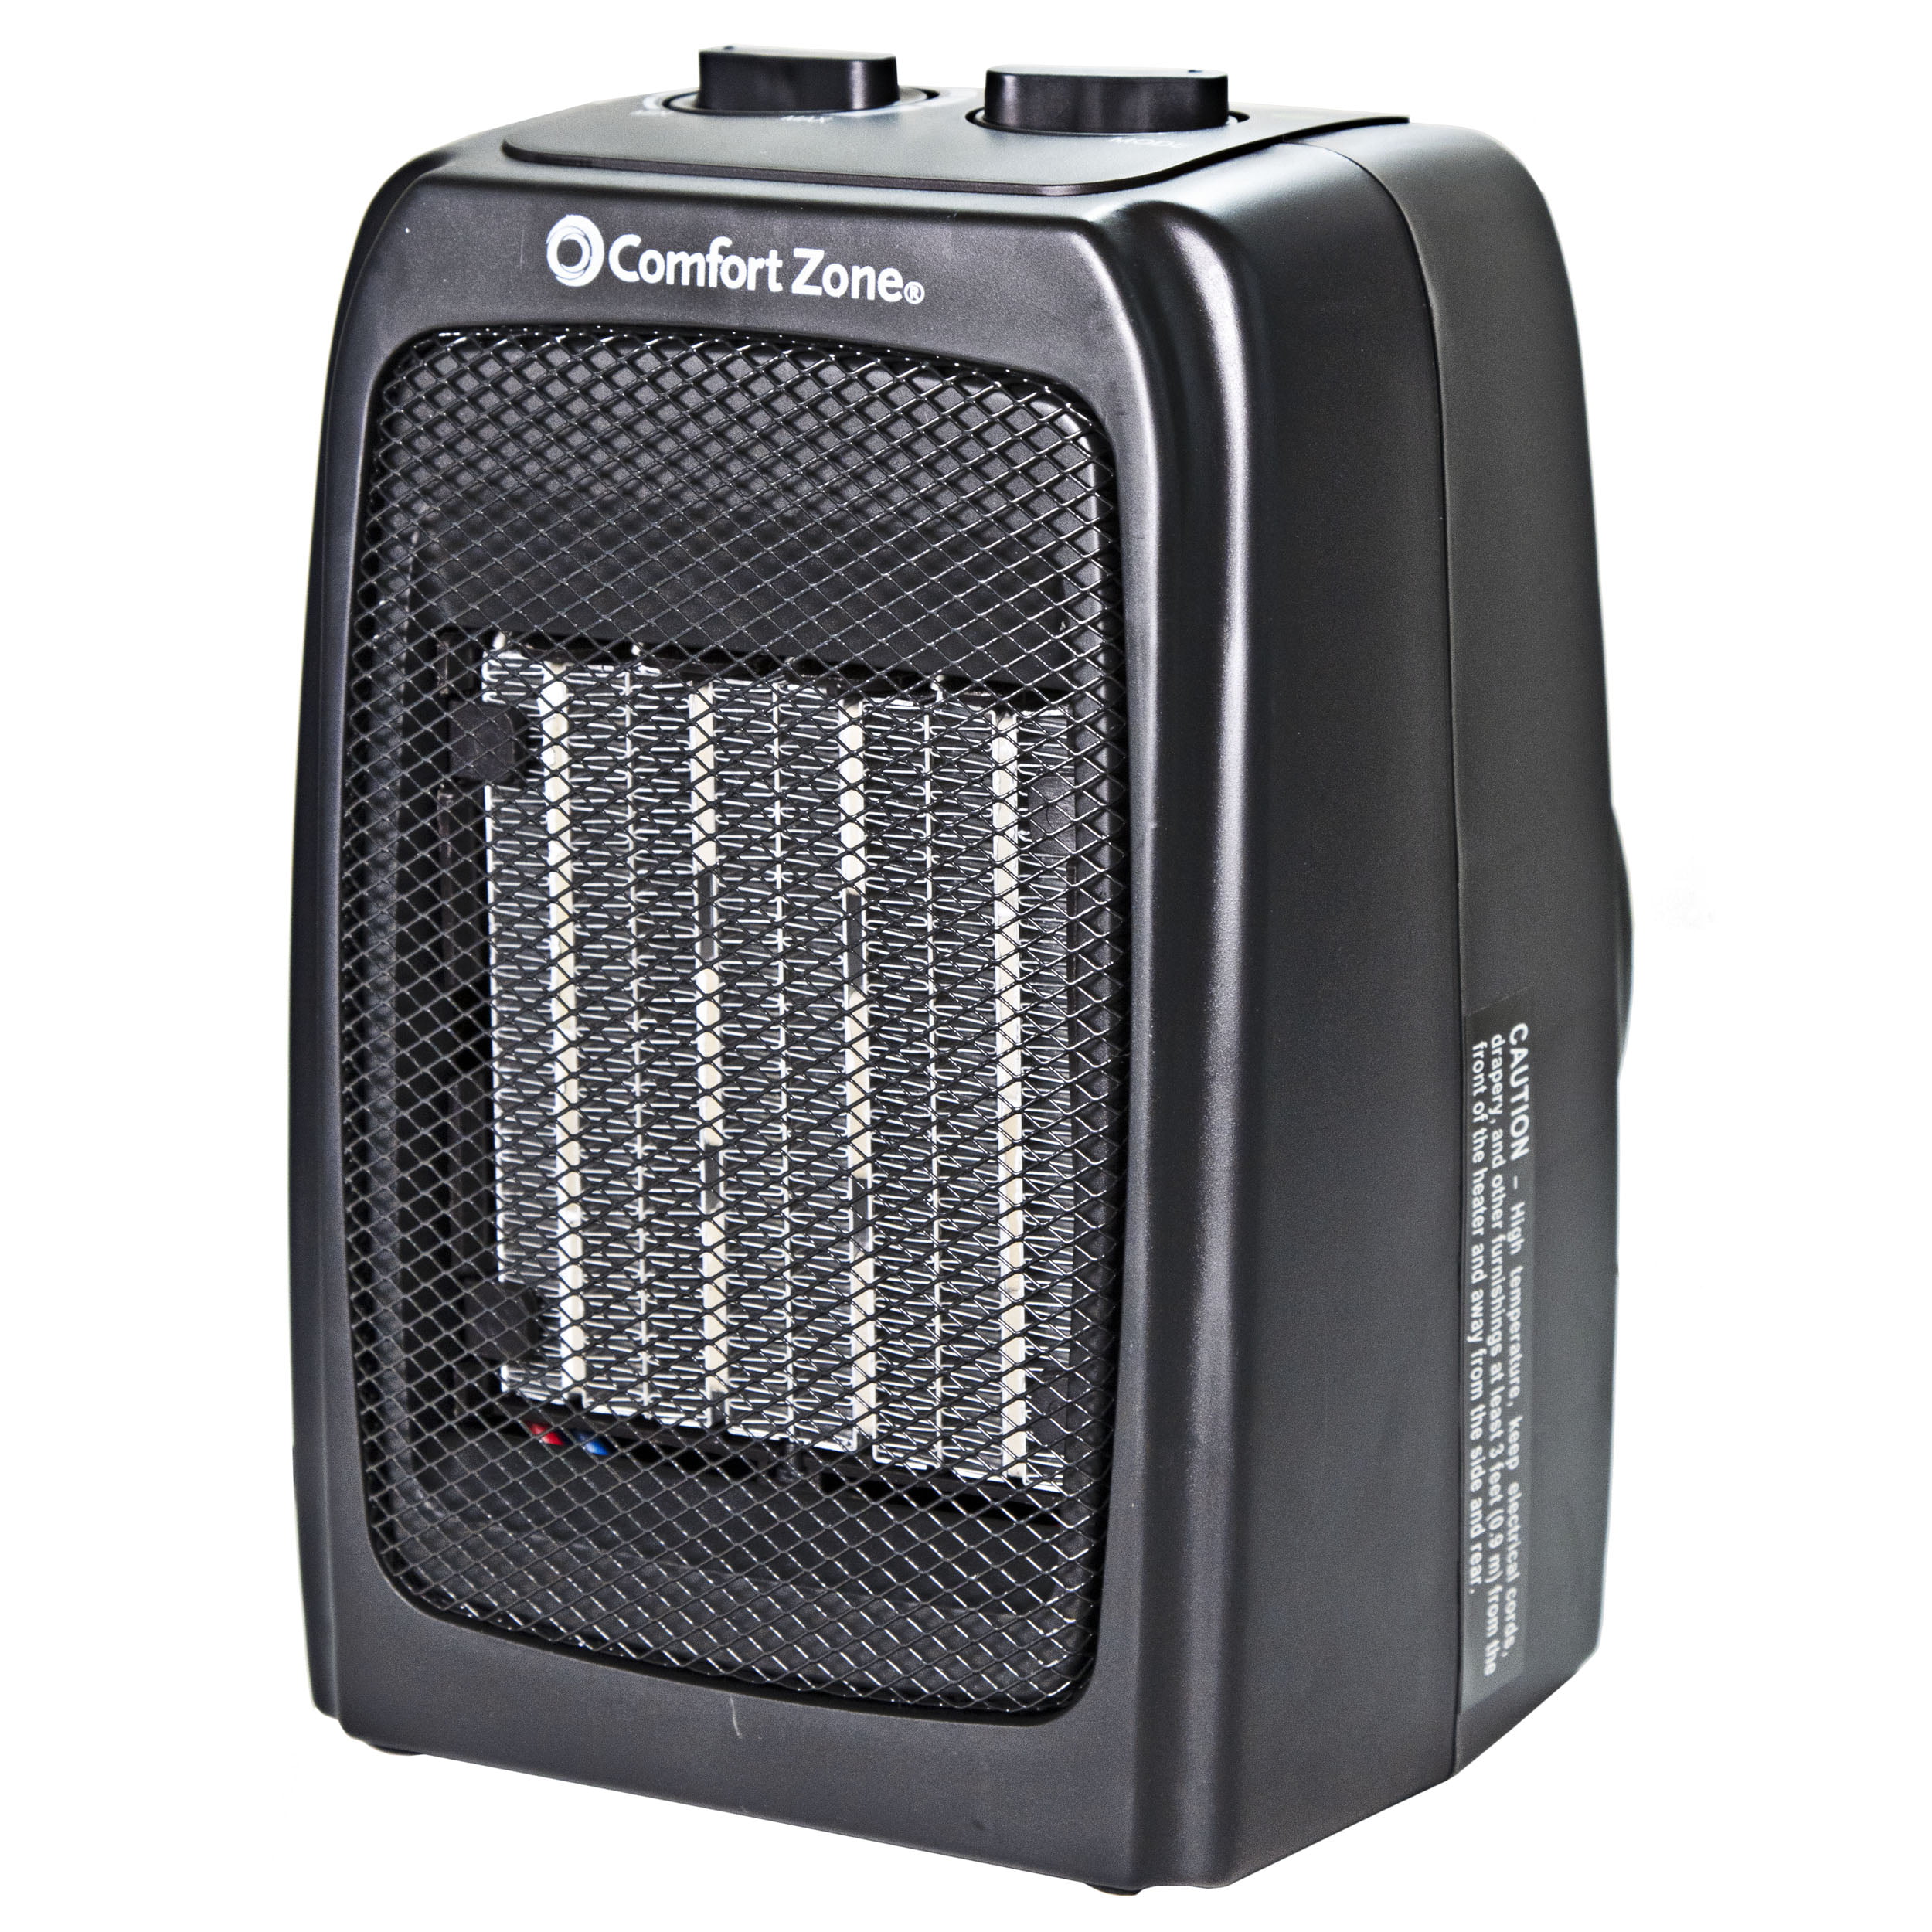 Comfort Zone CZ441E Personal Ceramic Heater - 1500W Energy ...